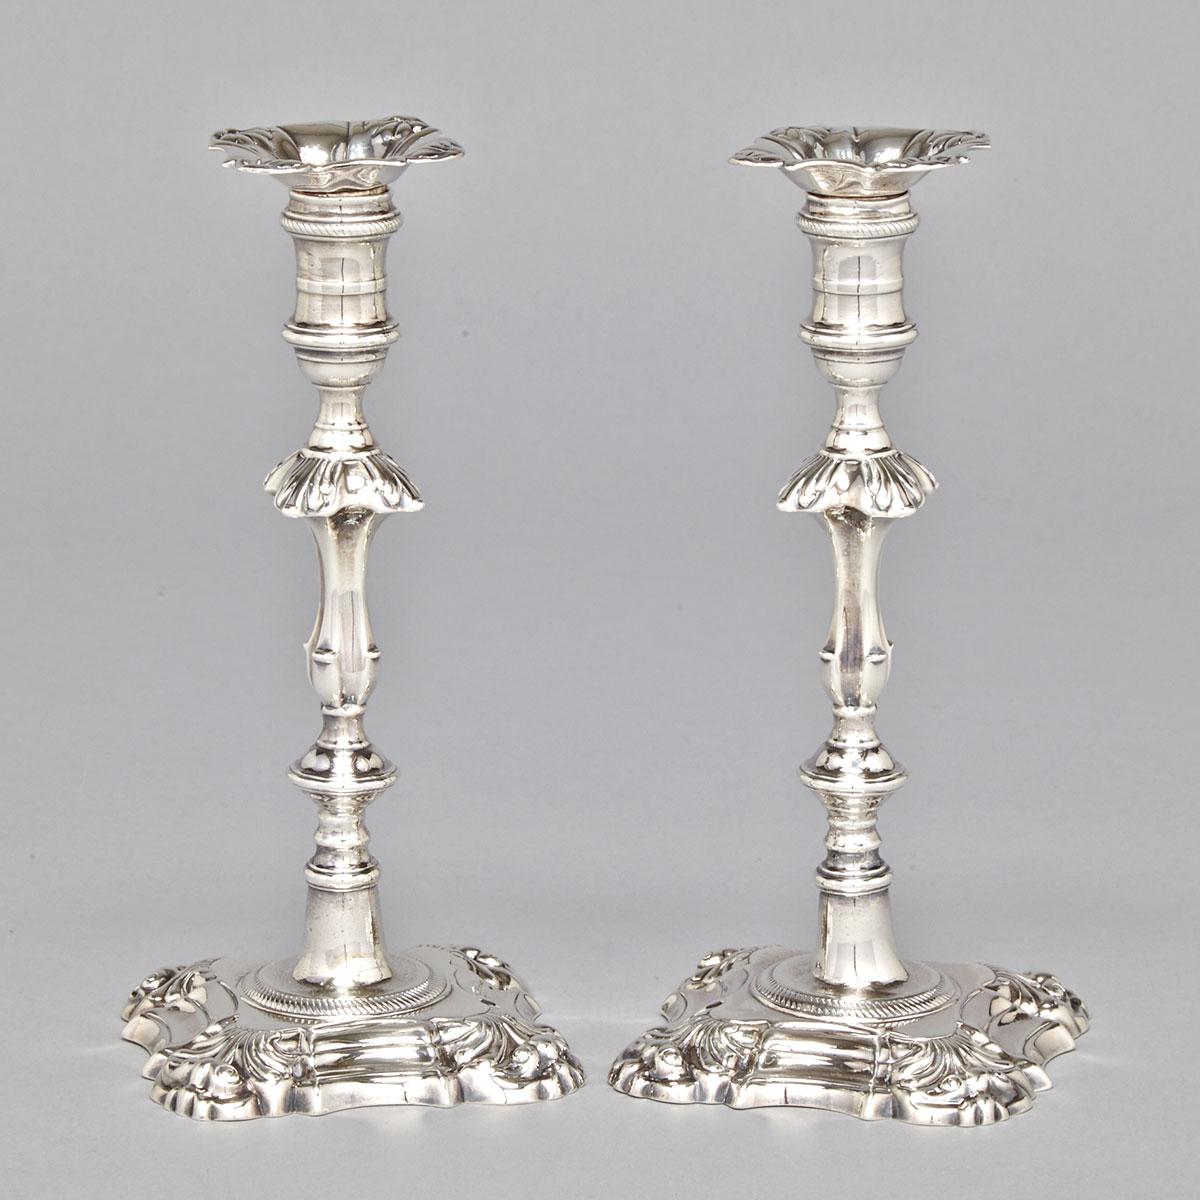 Pair of George III Silver Table Candlesticks, Elizabeth Cooke, London, 1763